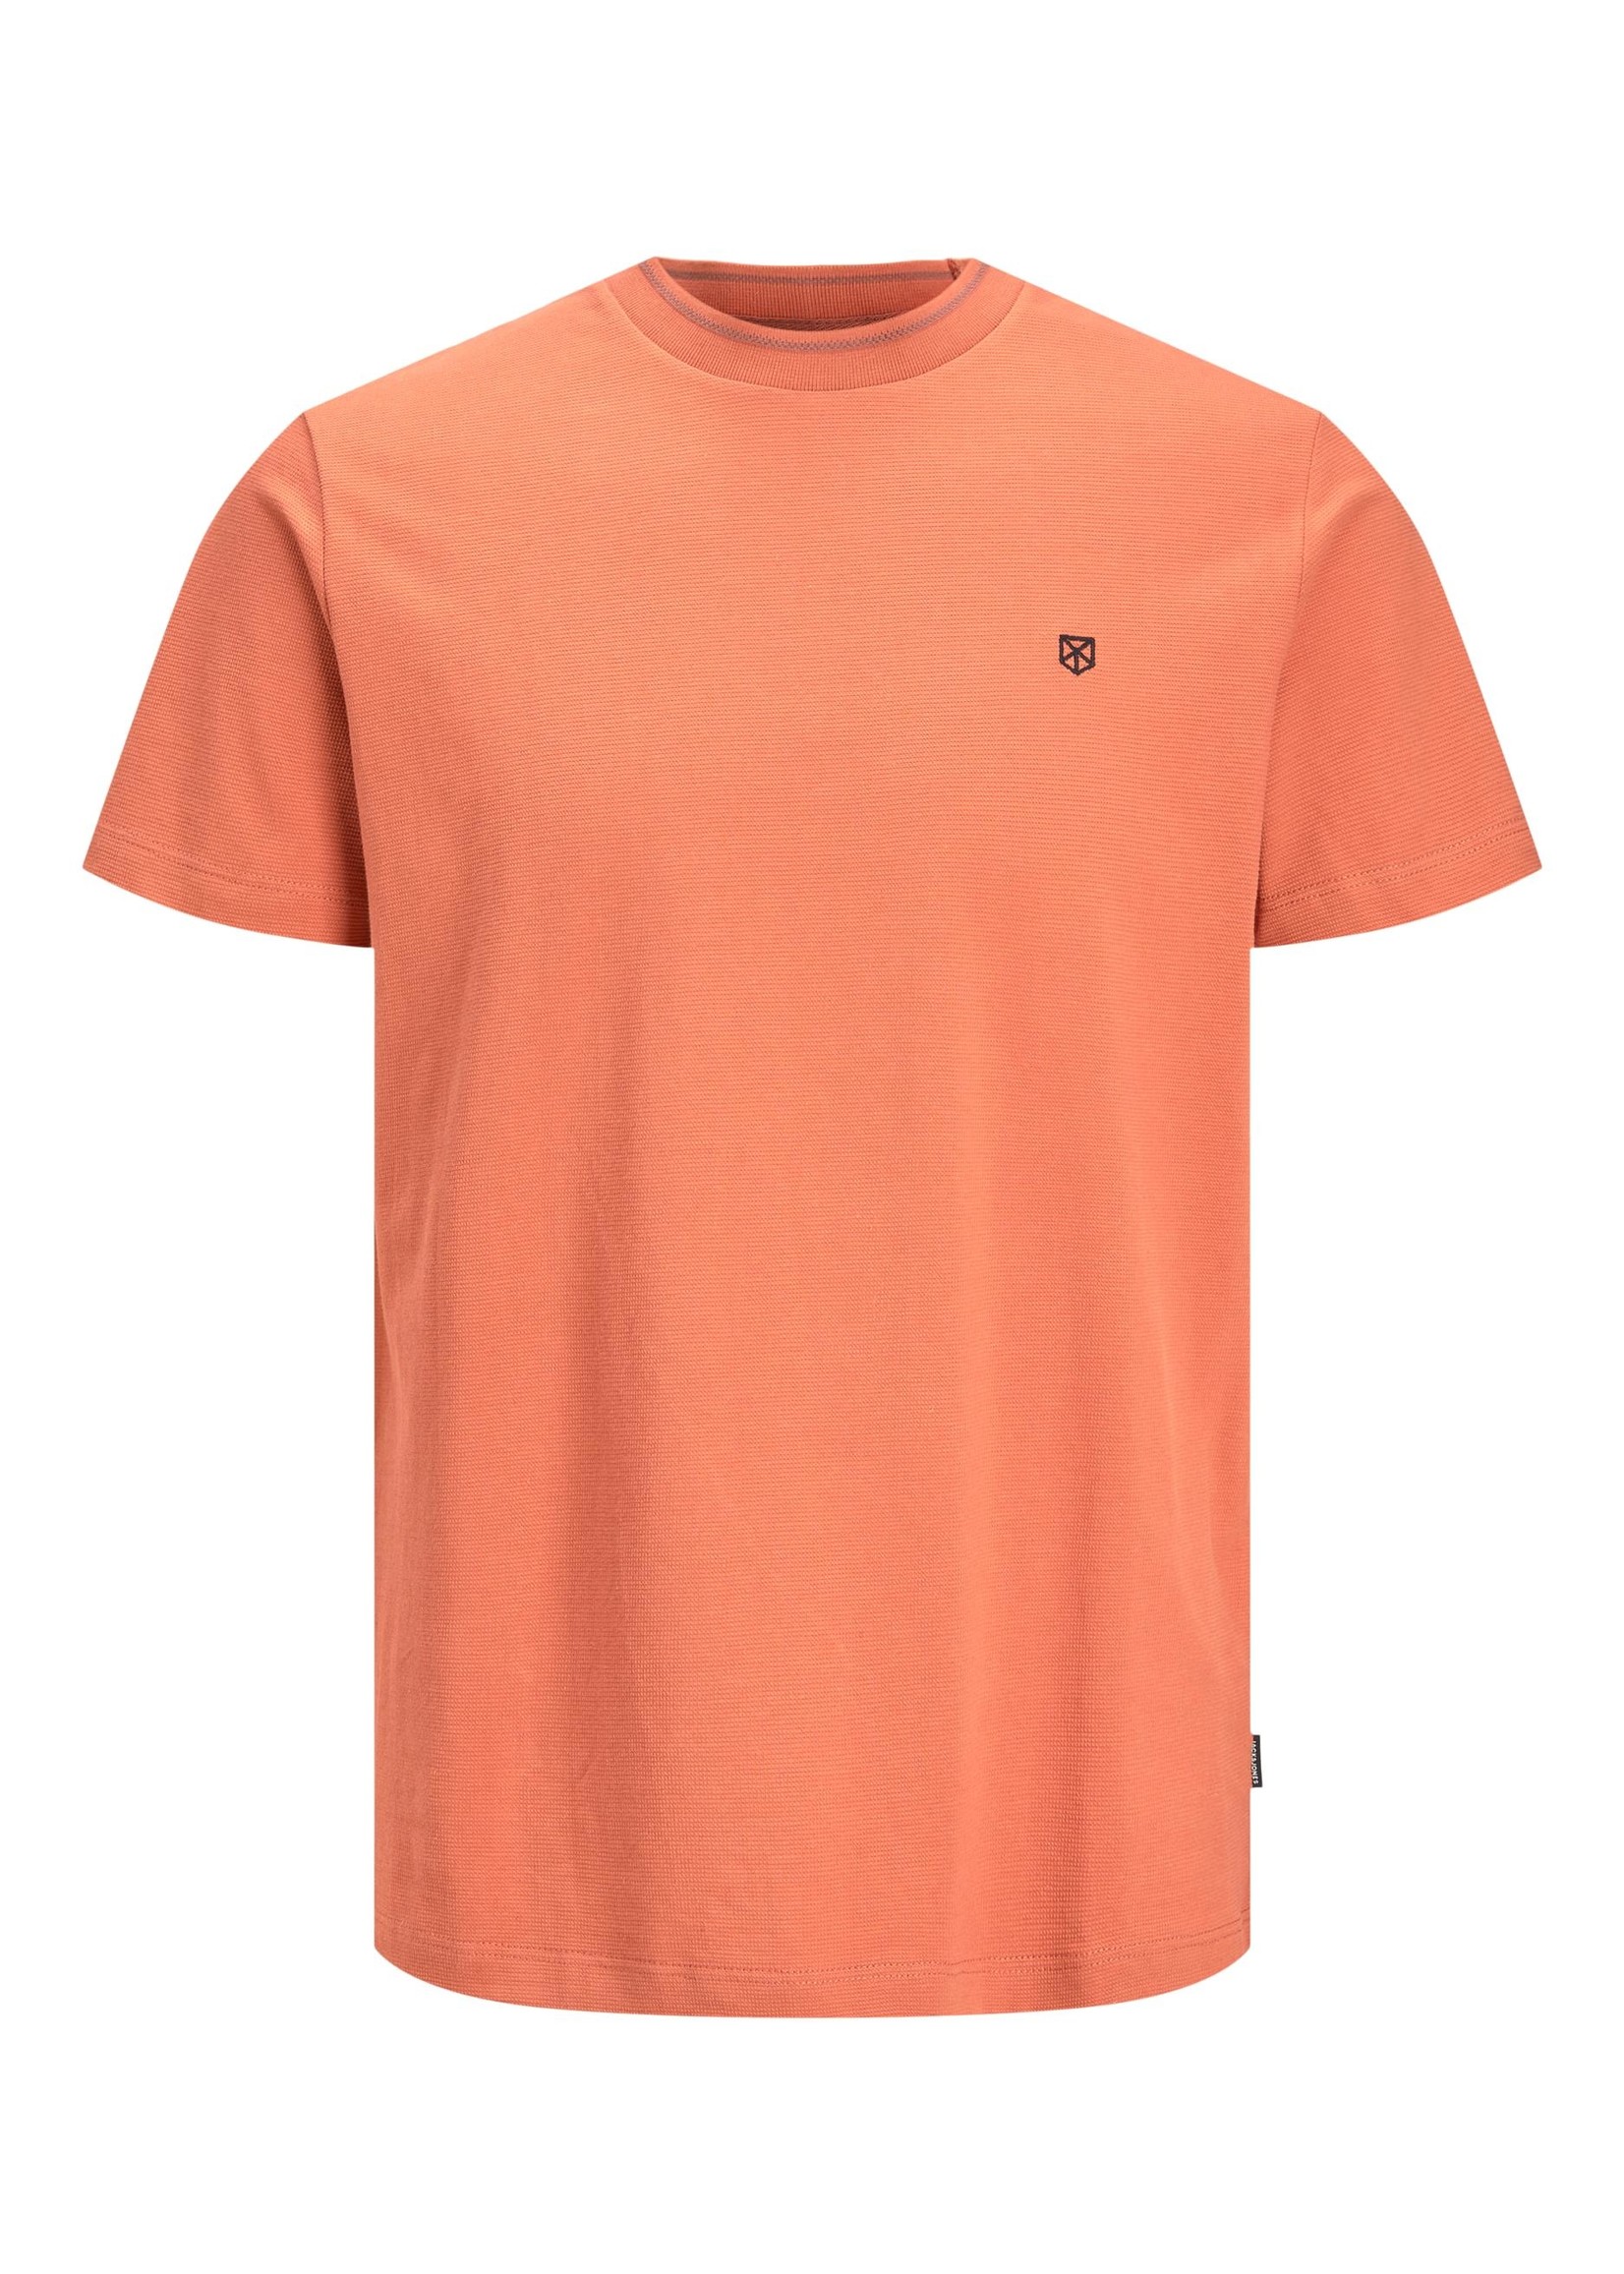 Jack & Jones T-shirt JPRblastructure - Apricot Brandy